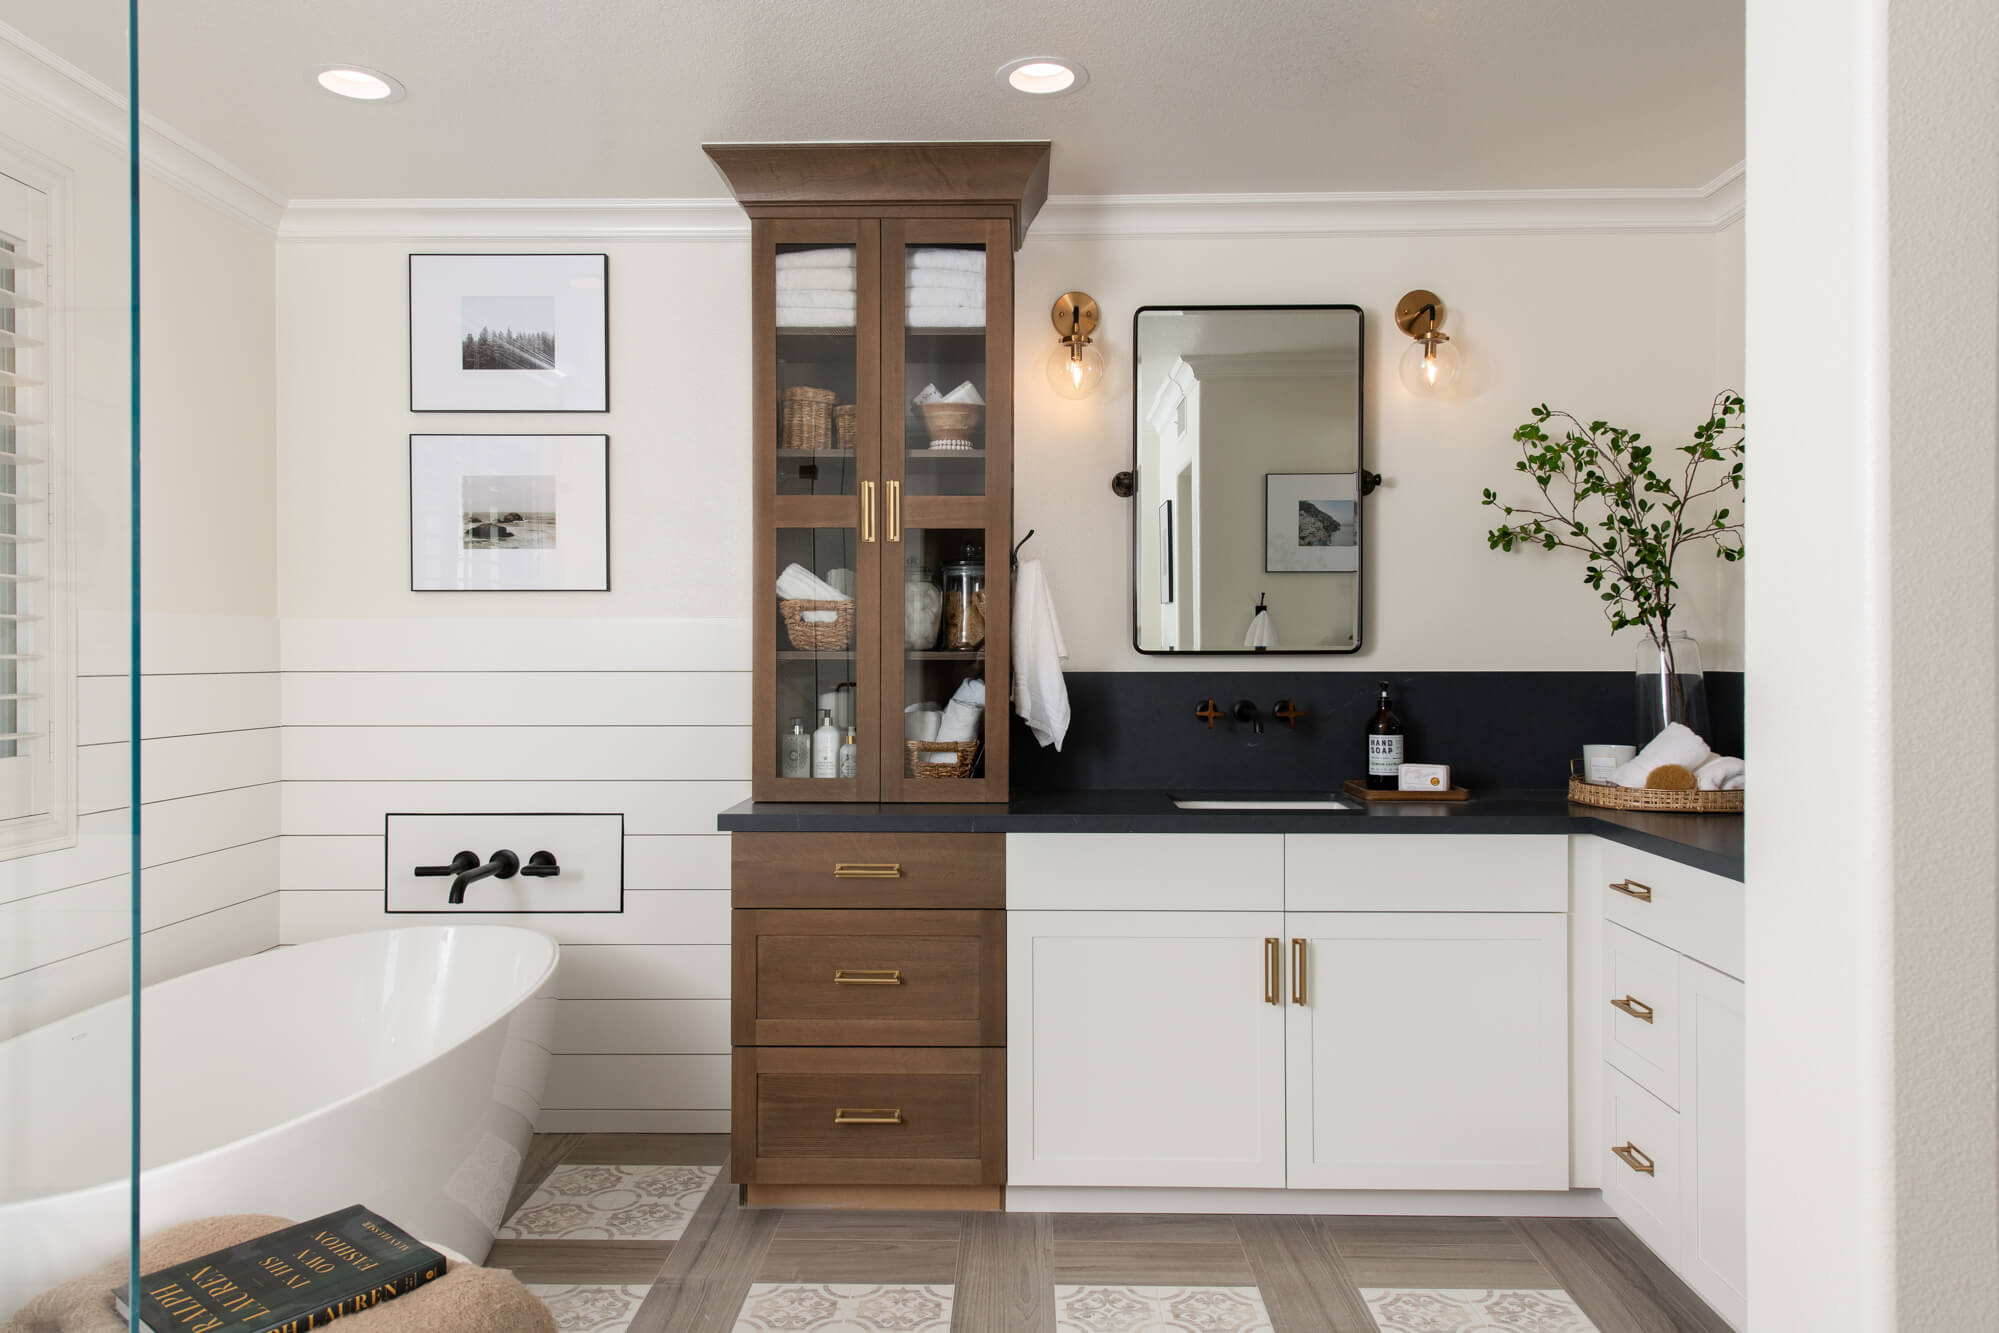 Ladera Ranch master bathroom remodel with porcelain tile flooring